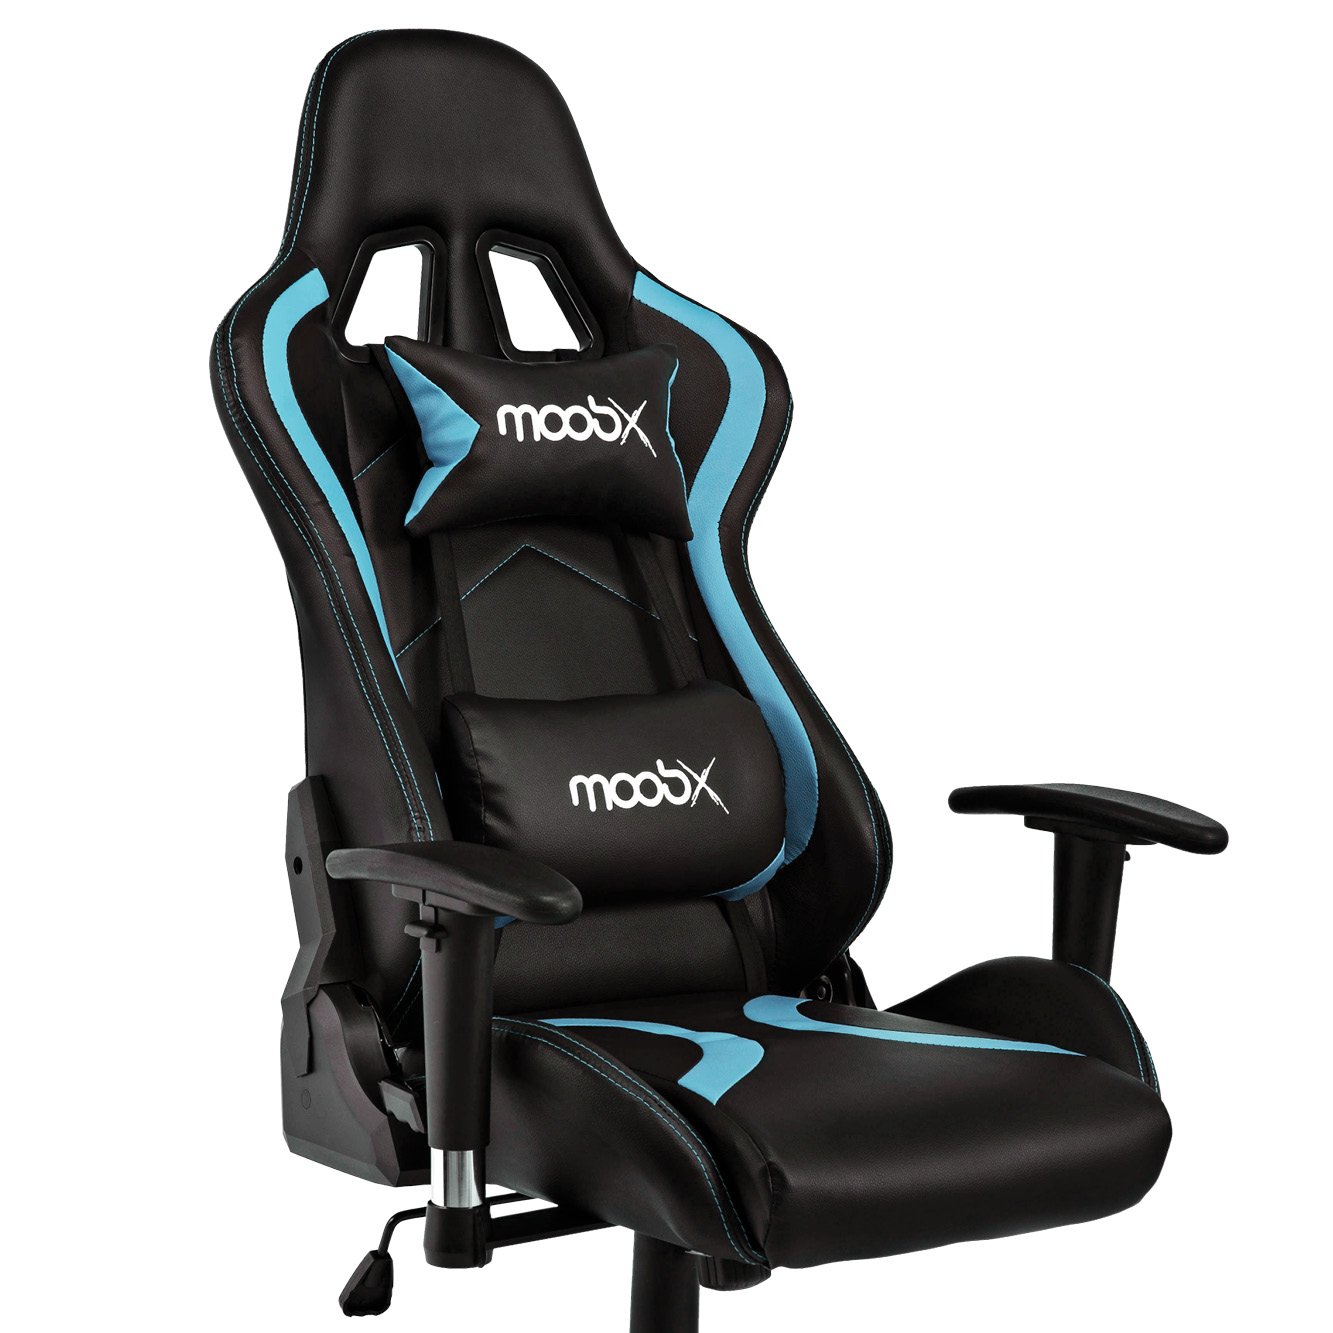 Kit Cadeira Gamer Moobx Thunder Azul + Mesa Gamer Mx Preto com Gancho para Headset - Moobx - 2